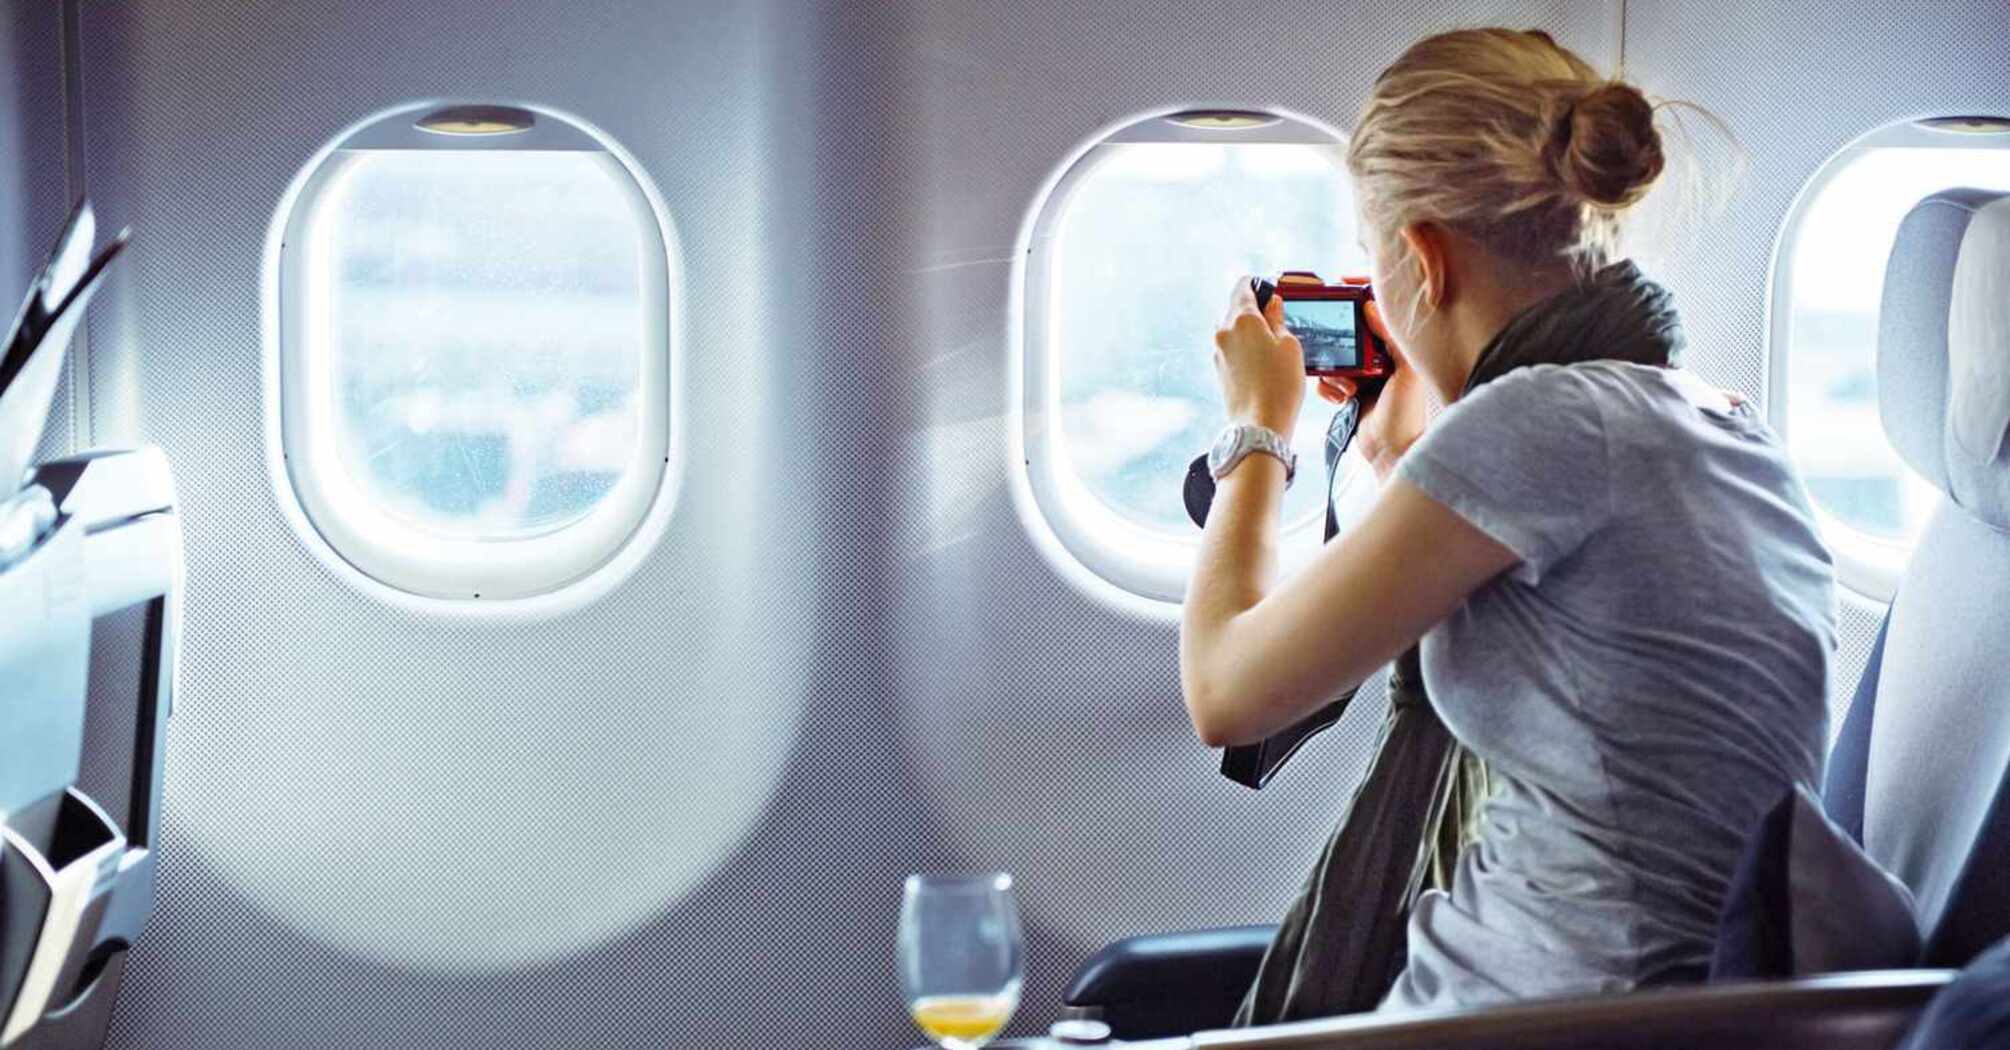 A list of life hacks tourists use to save on plane tickets